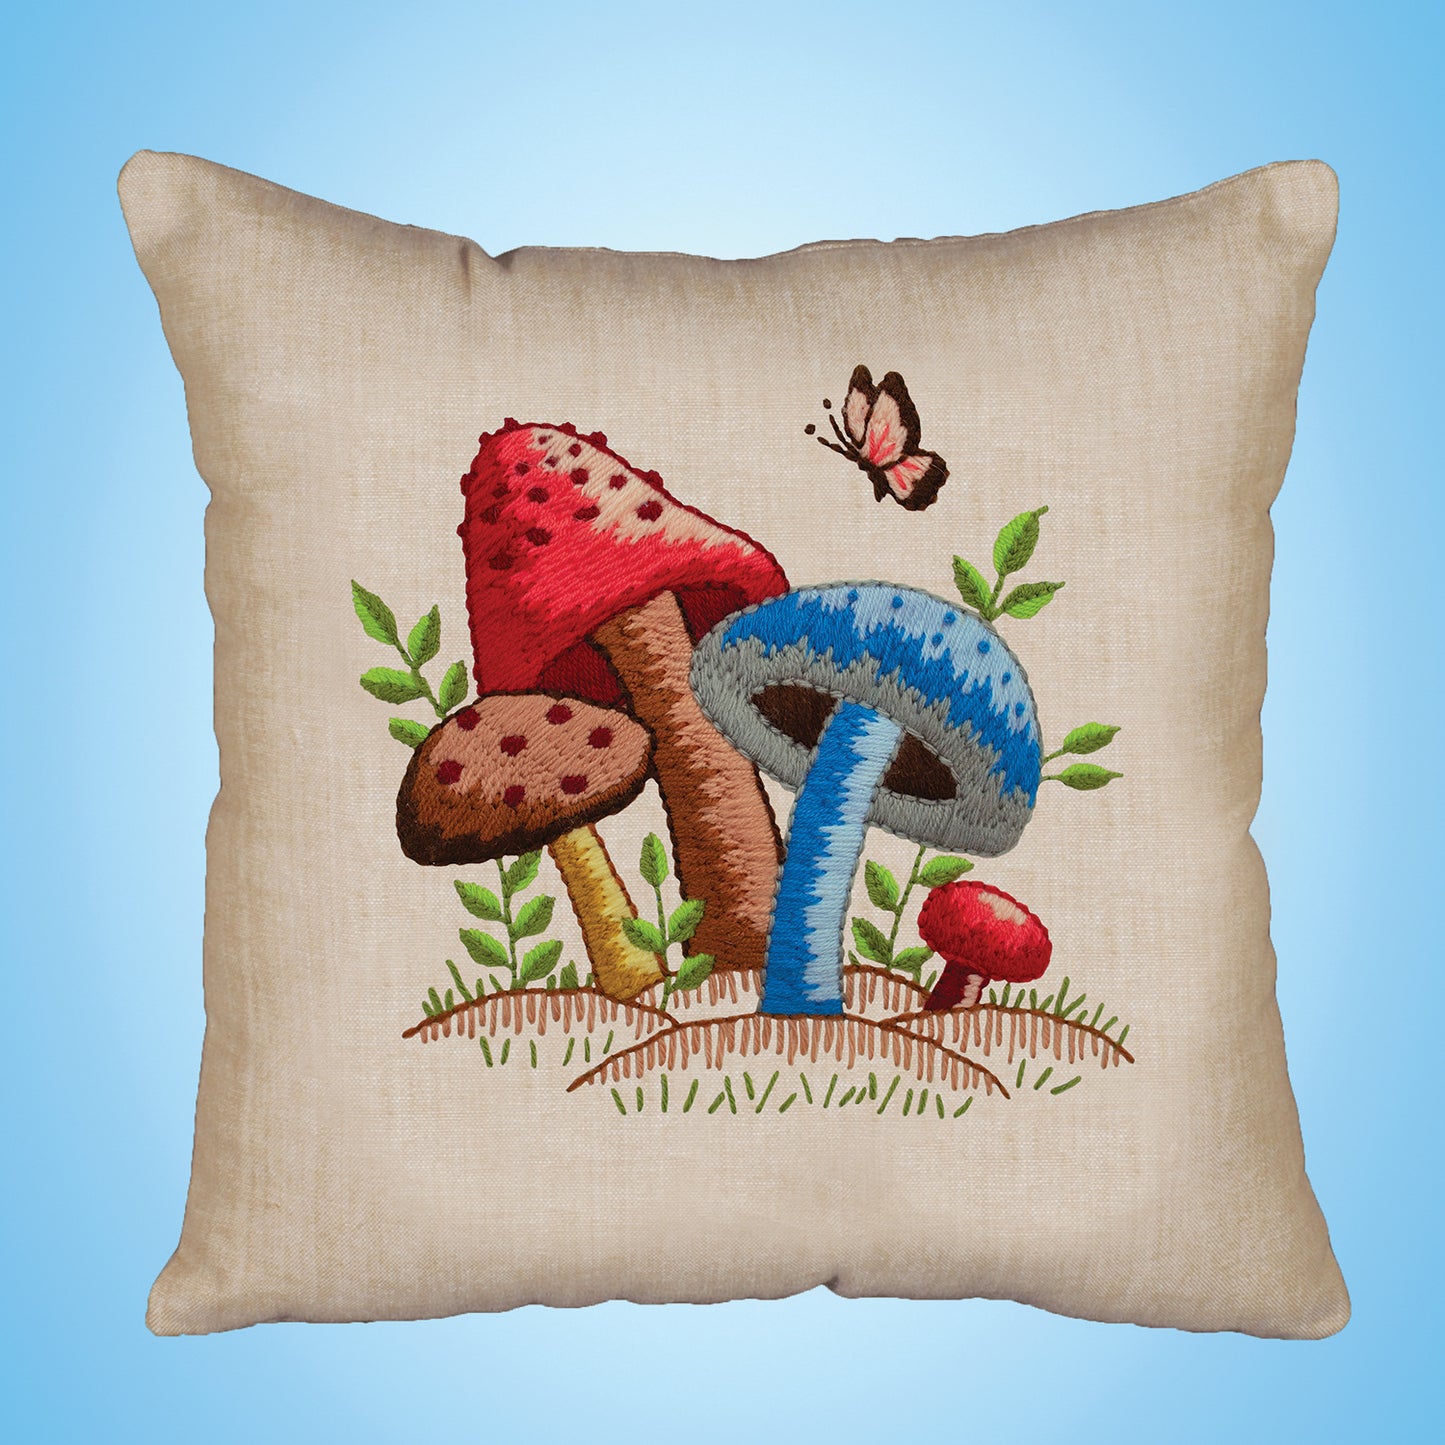 Mushroom Crewel Embroidery Pillow Kit Primary Image